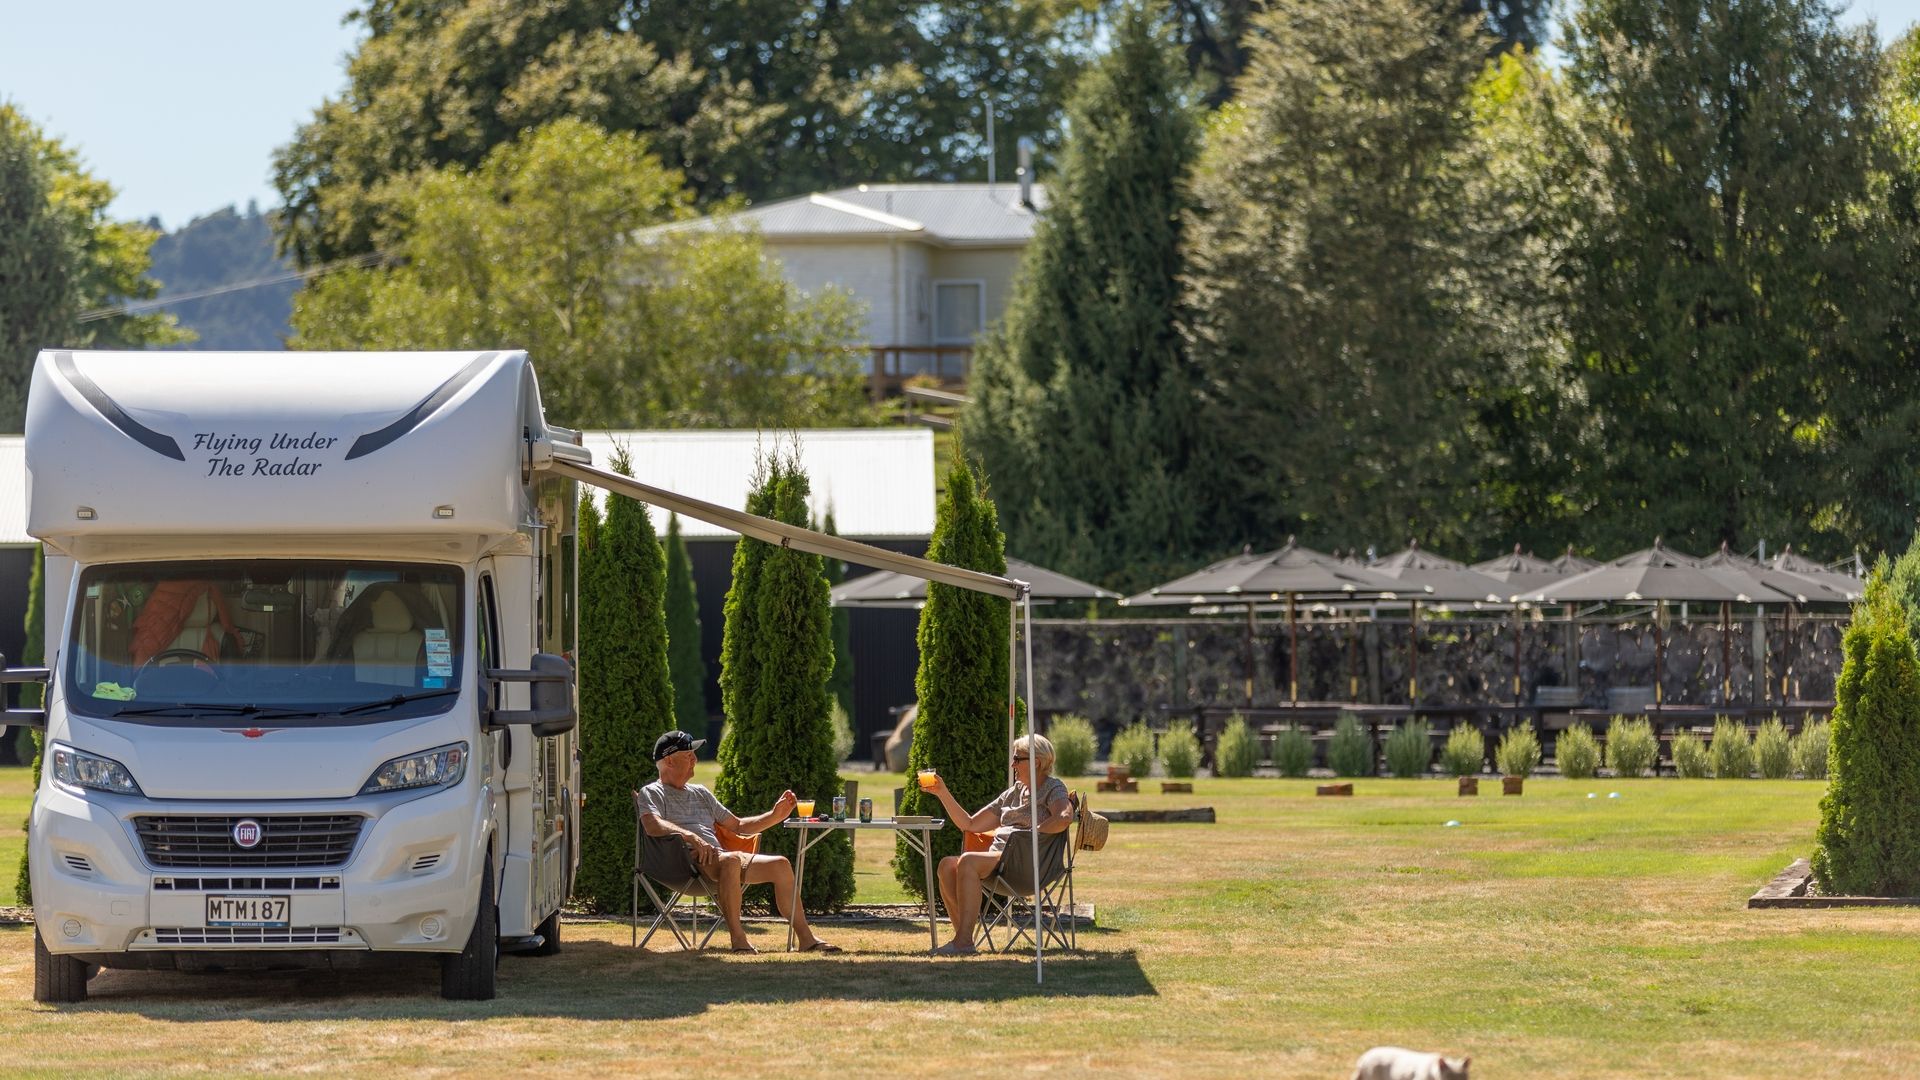 Campervans set up at Bradleys Garden, Taumarunui - Visit Ruapehu.jpg